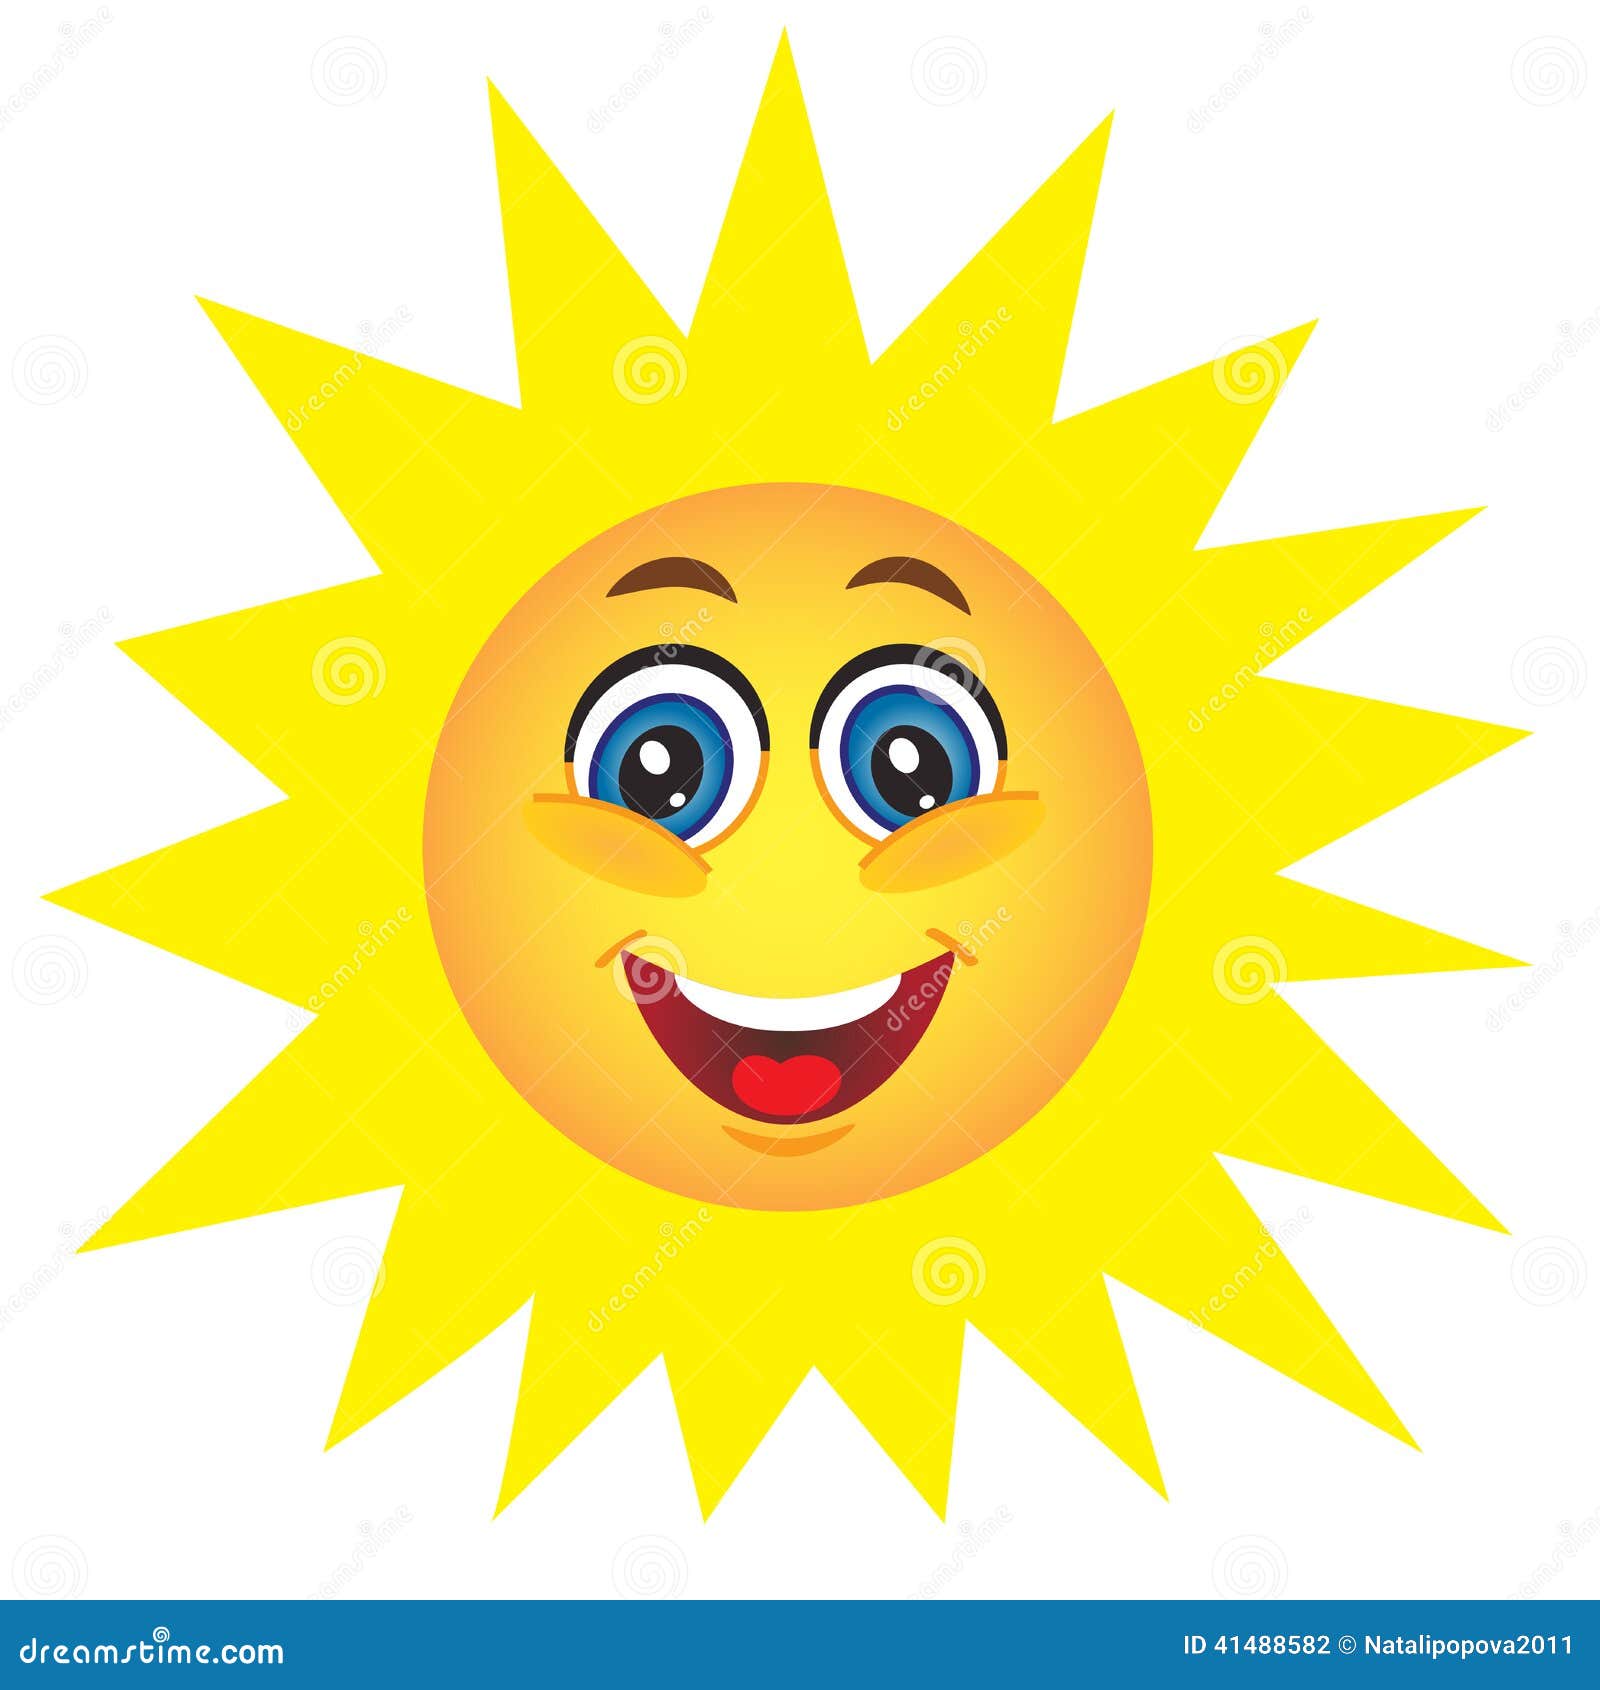 Cute Sun Stock Vector - Image: 41488582